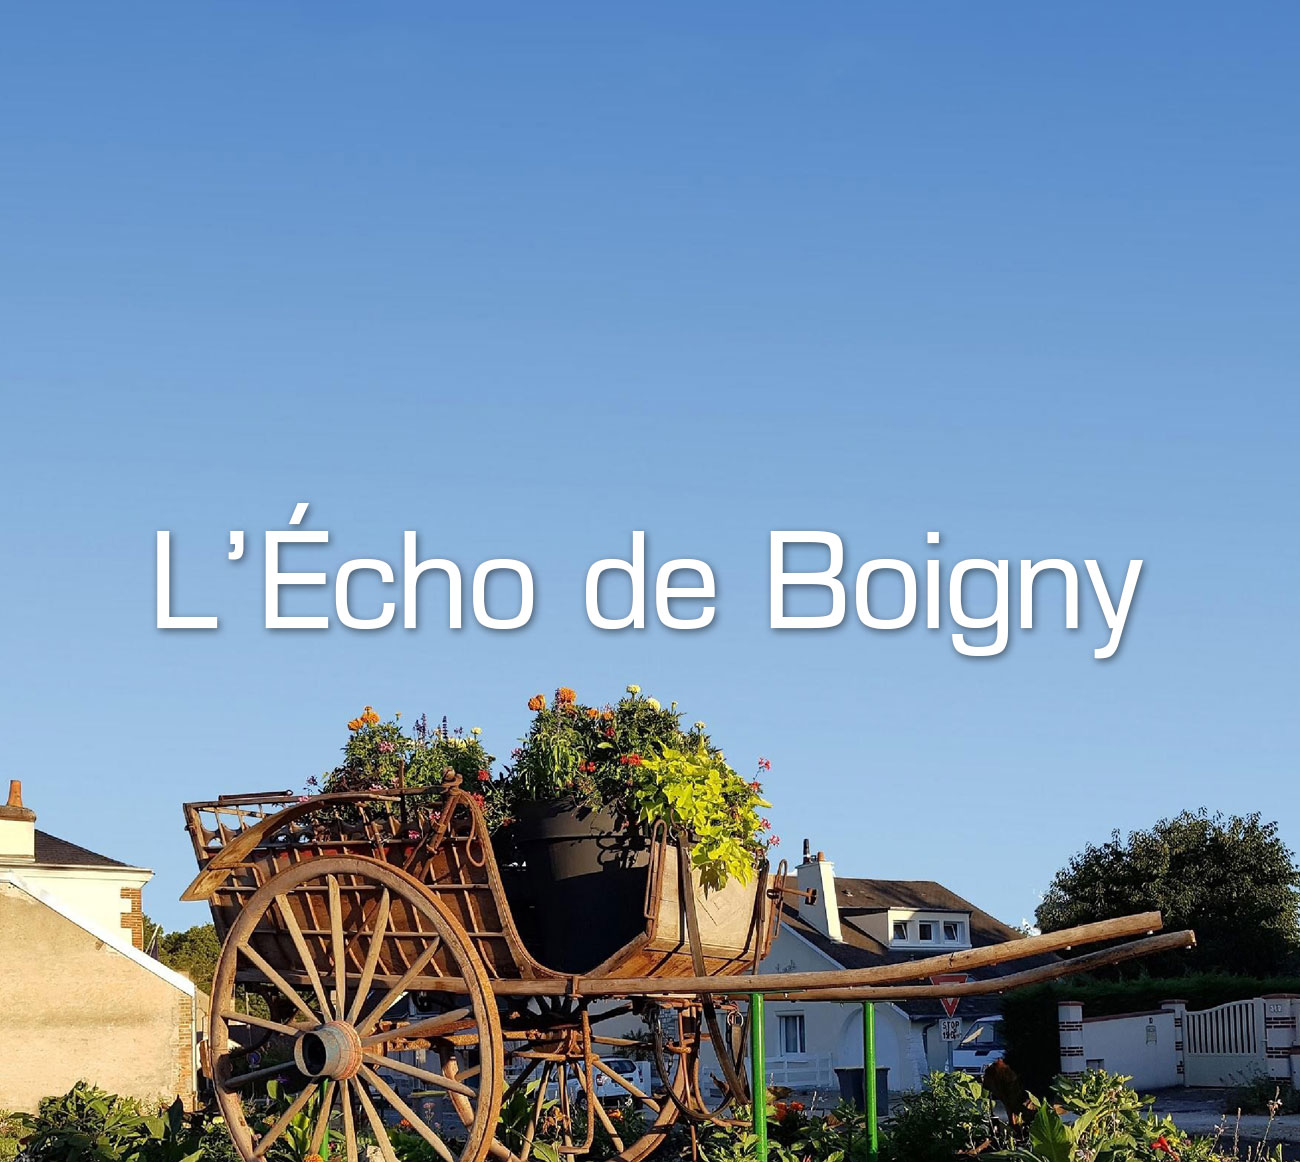 L'Échode Boigny, le bulletin municipal 138